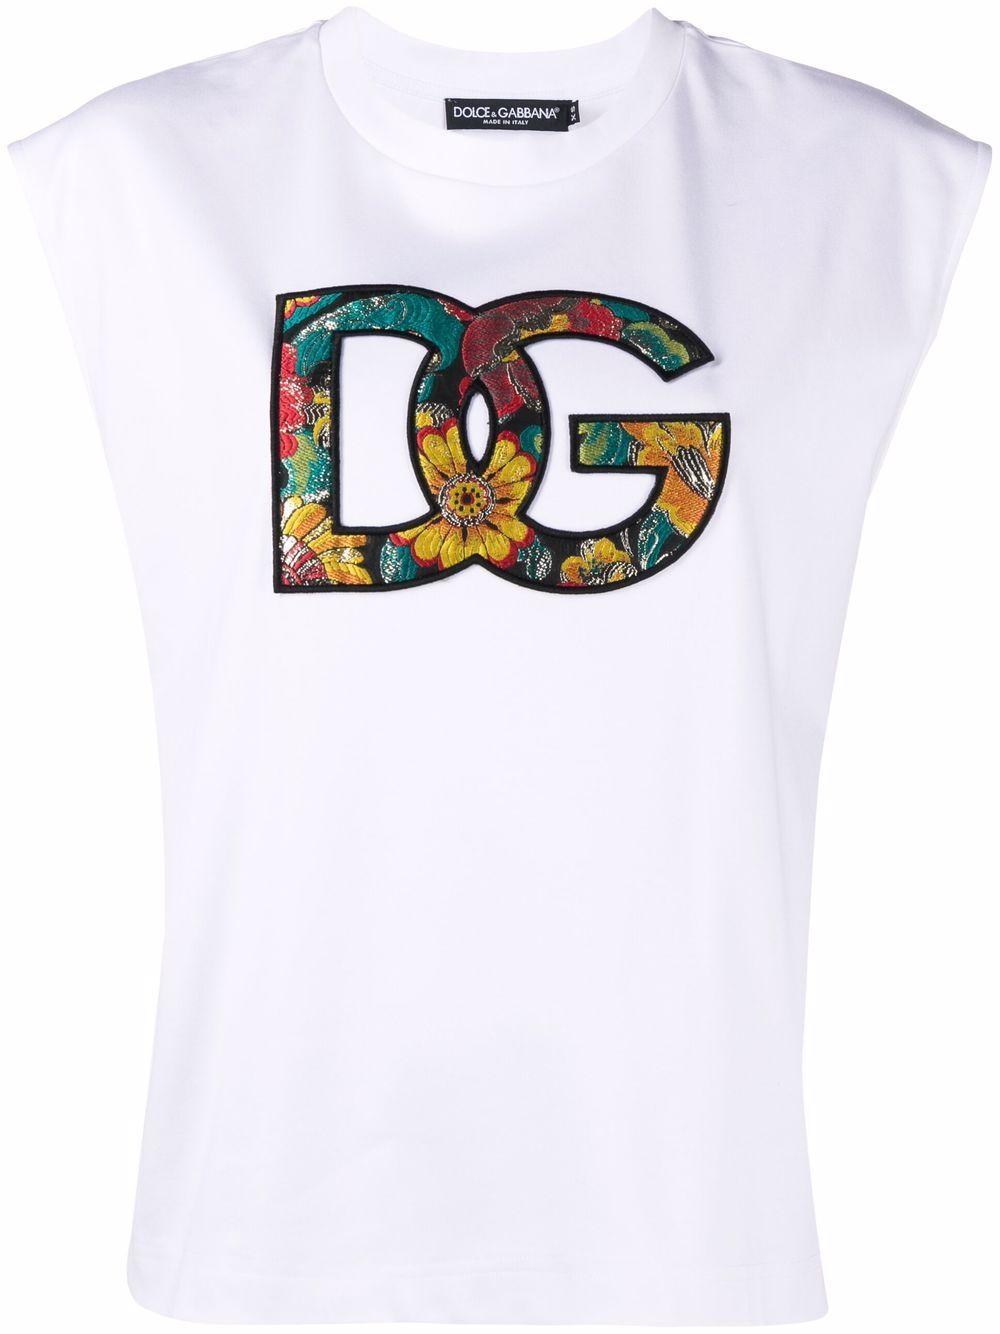 Dolce & Gabbana Dg Floral-logo Cotton T-shirt in White - Save 55% | Lyst